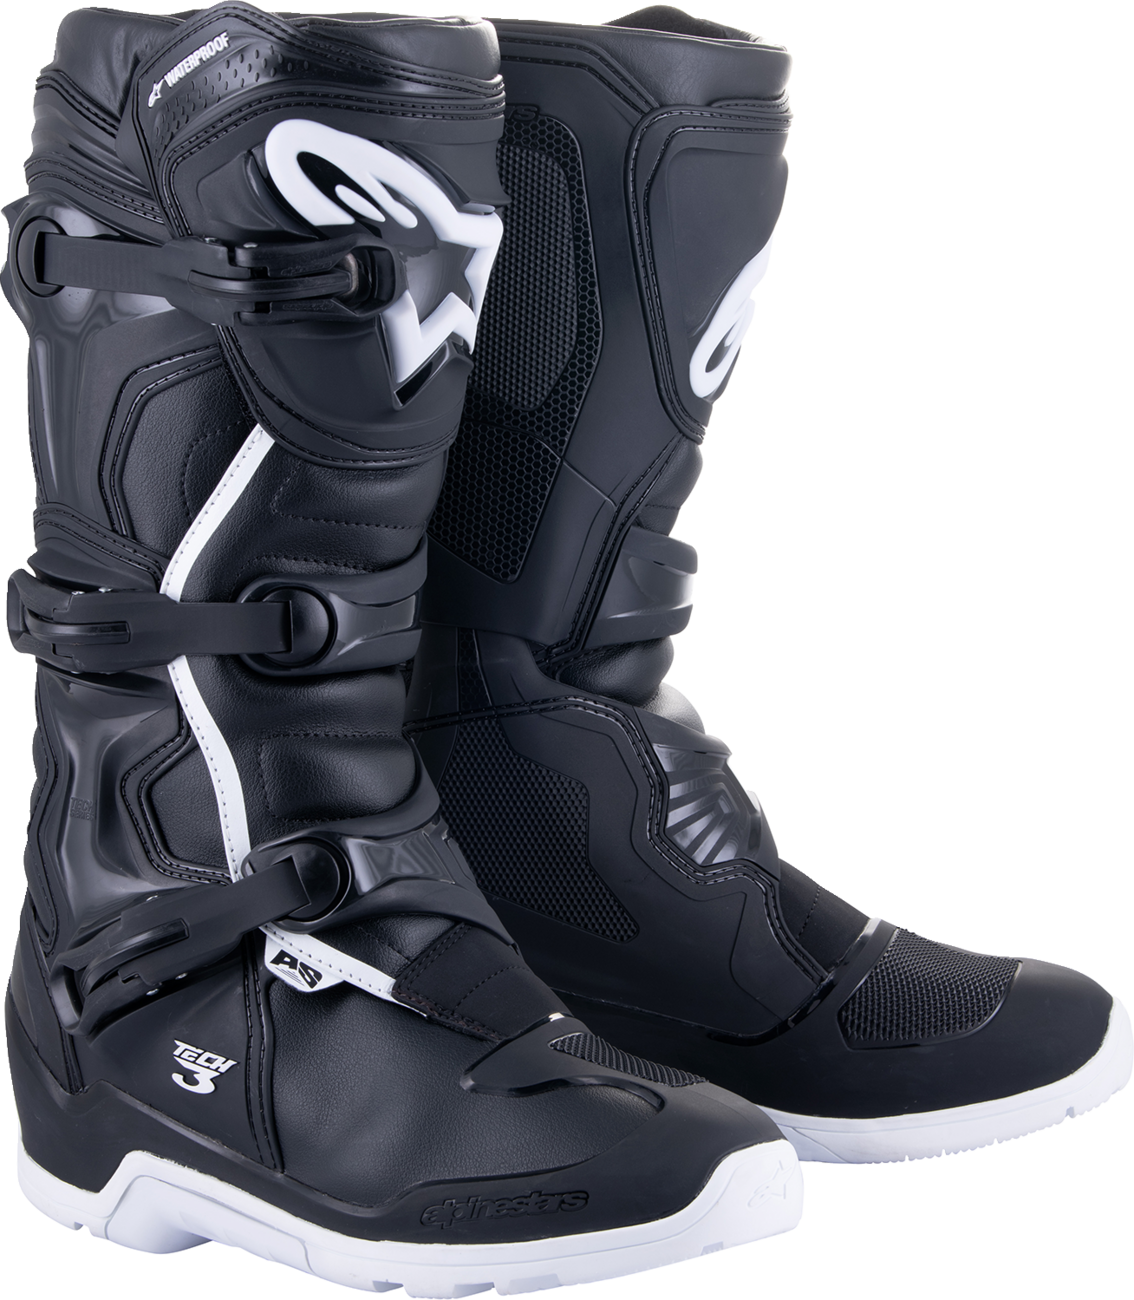 ALPINESTARS Tech 3 Enduro Waterproof Boots - Black/White - US 11/EU 45.5 2013324-12-11